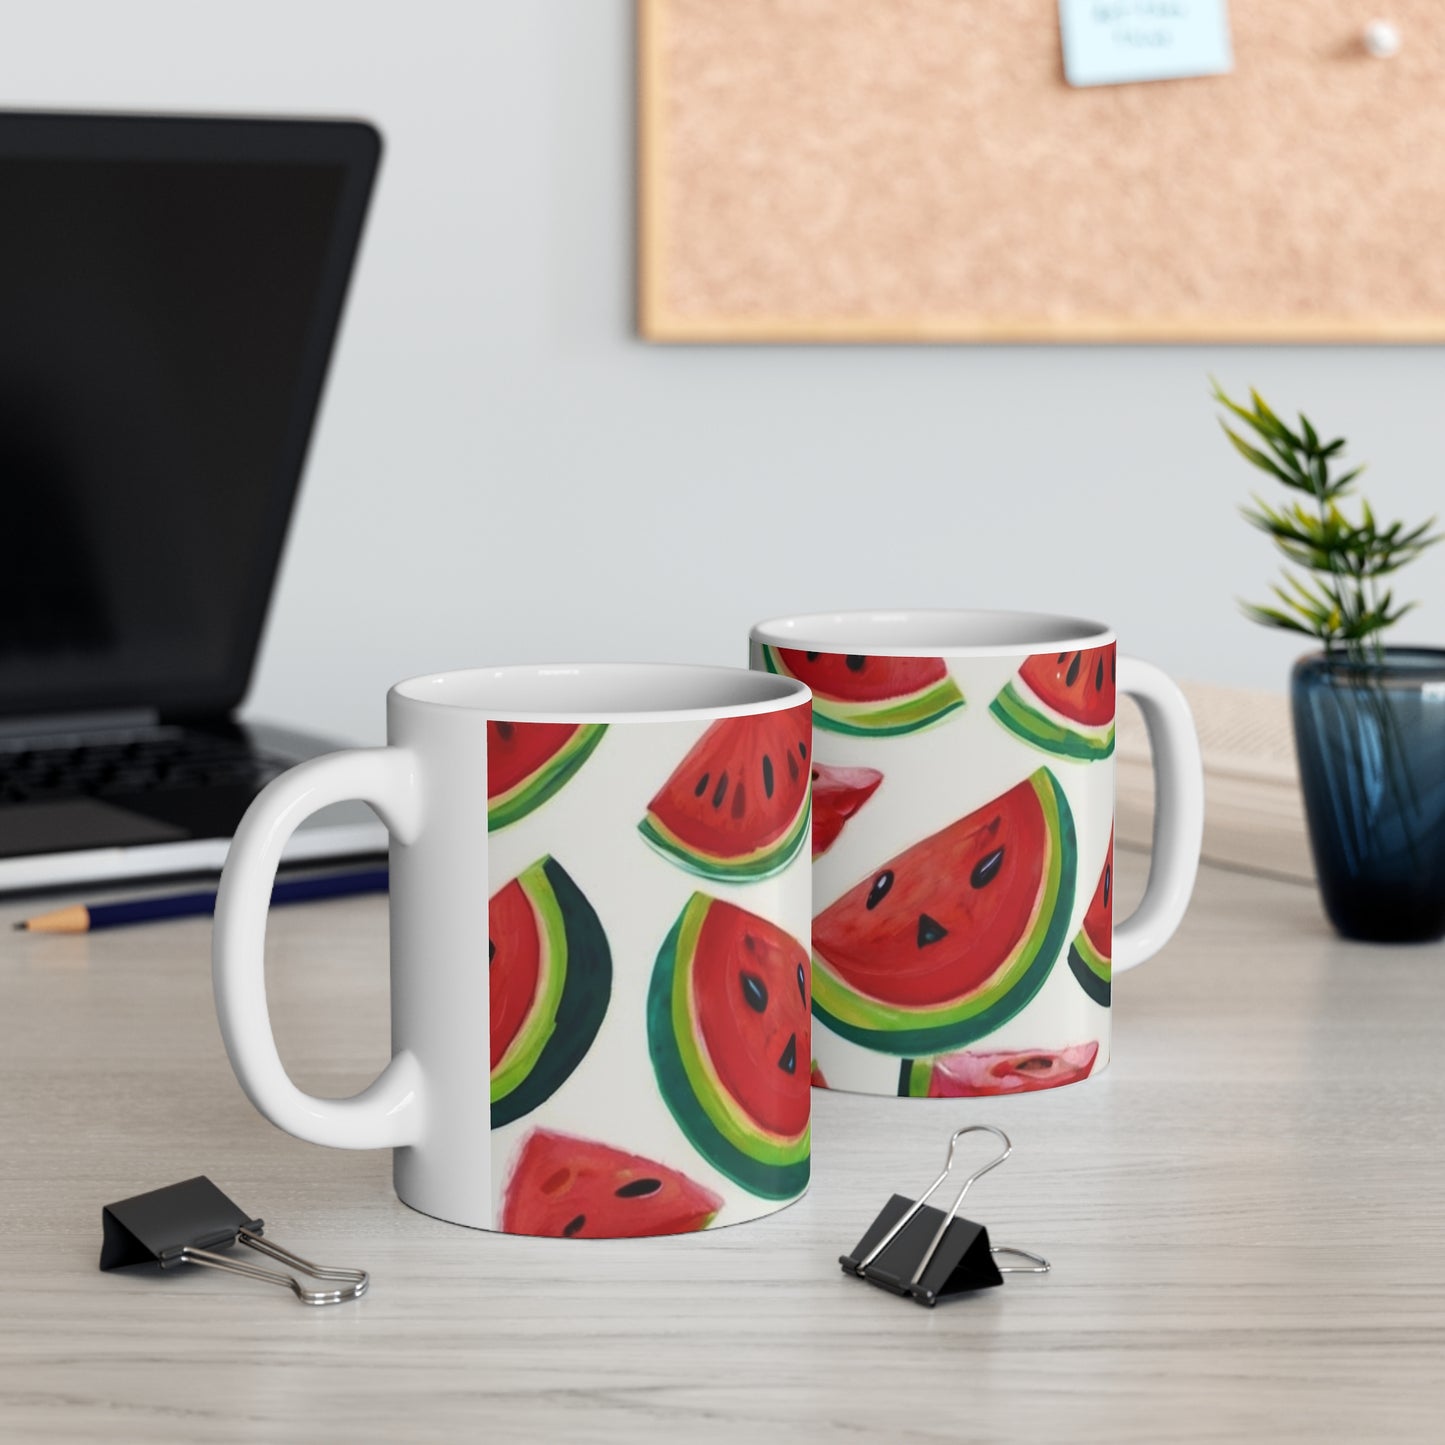 Watermelons Mug - Ceramic Coffee Mug 11oz